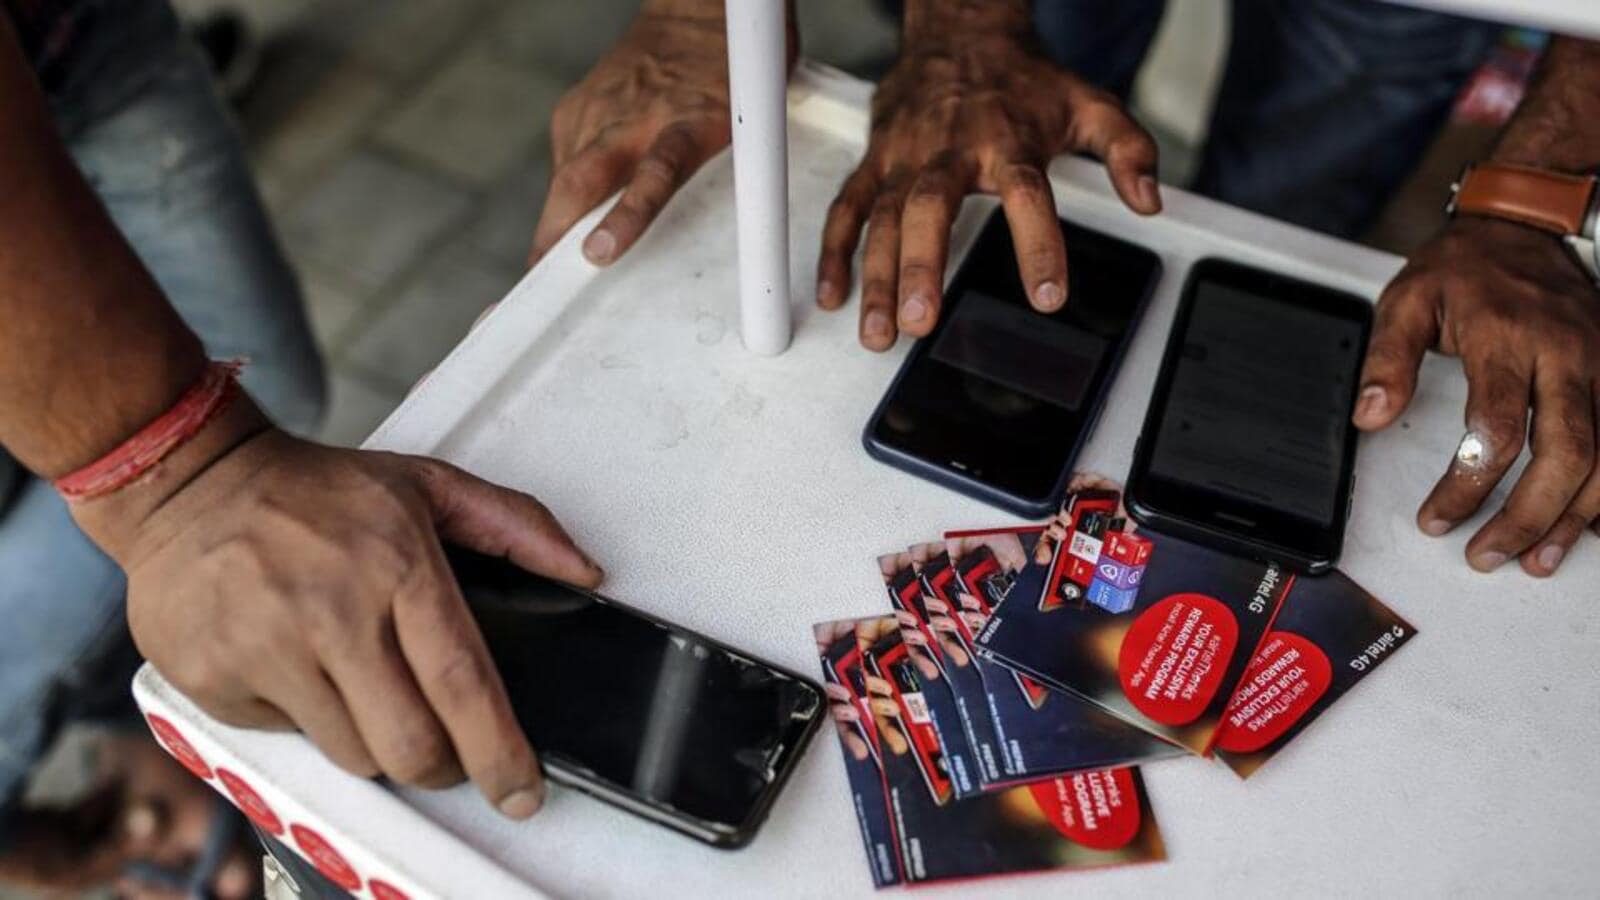 983 SIM cards used in cyber fraud blocked in crackdown by Nuh cops -  Hindustan Times